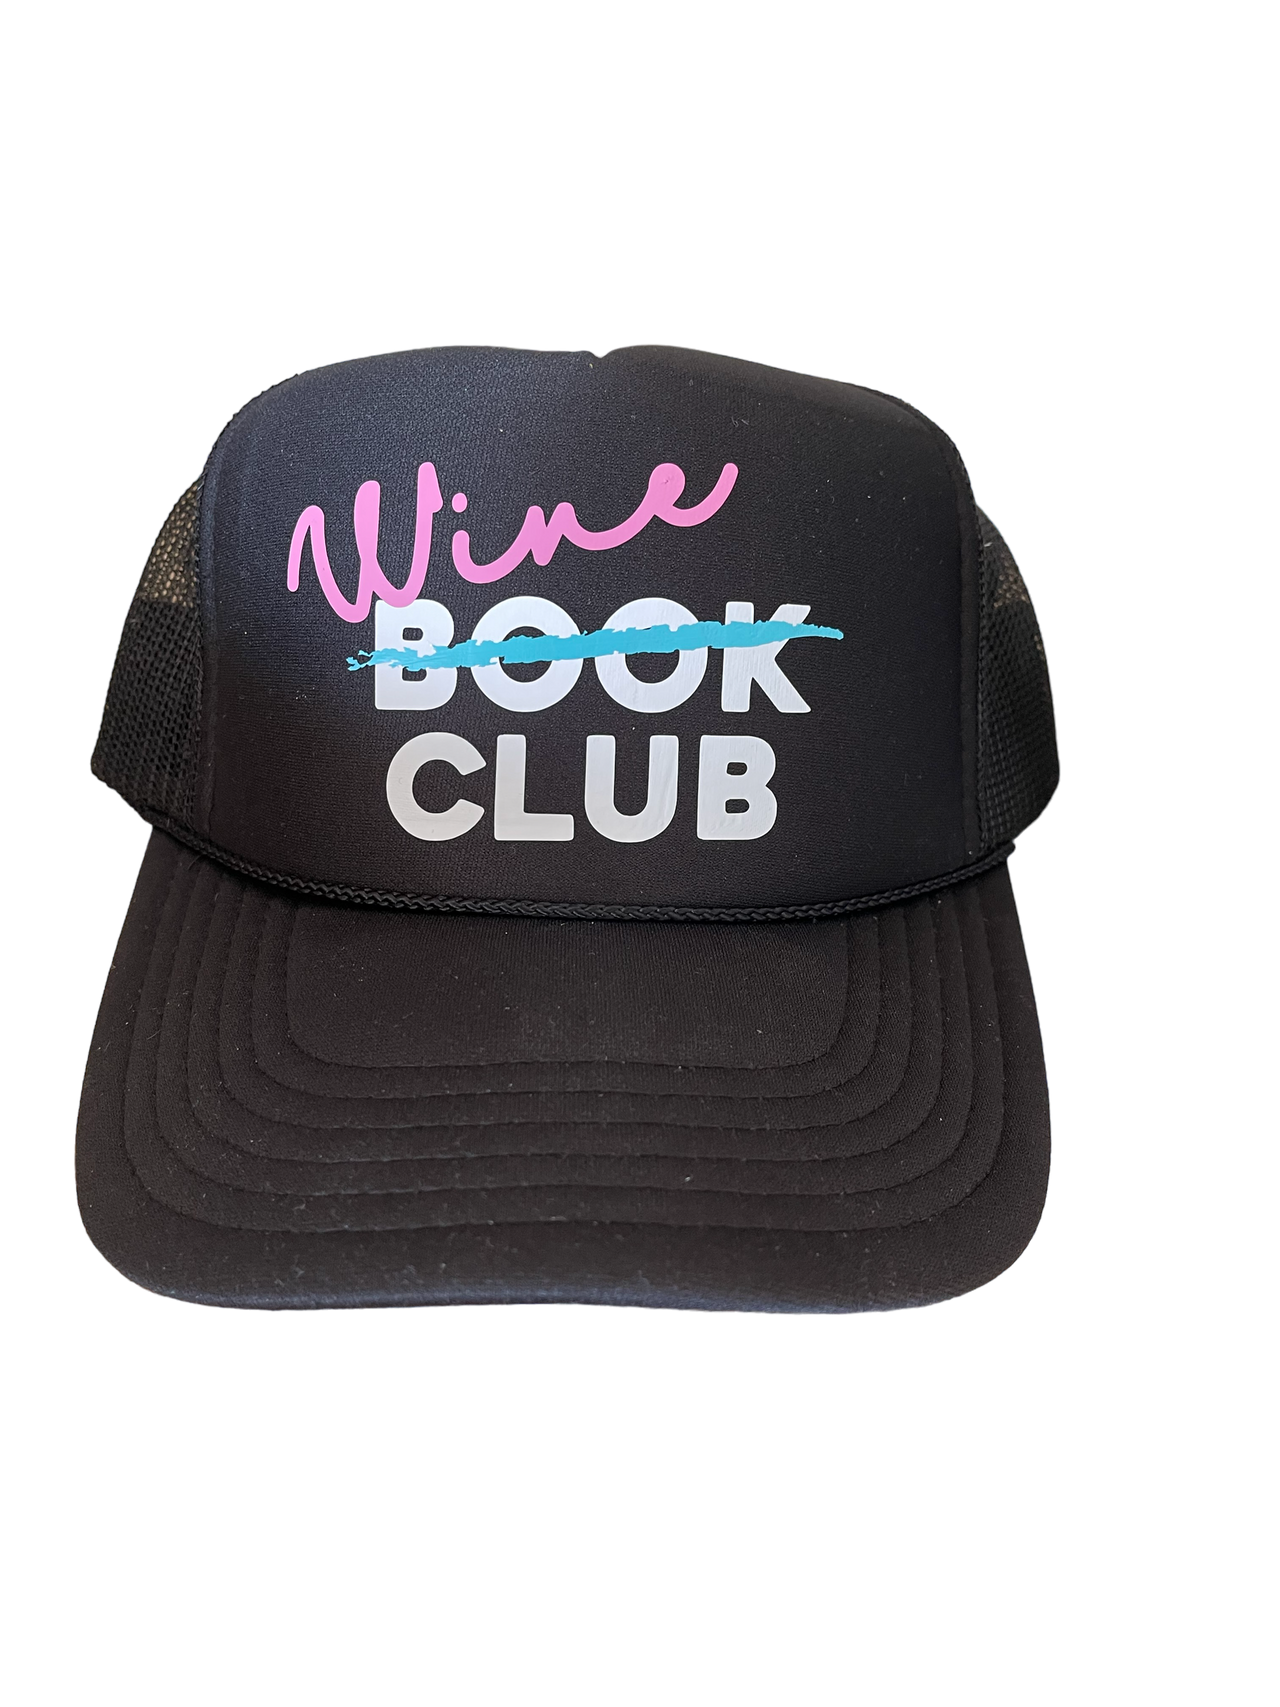 Wine/Book Club Trucker